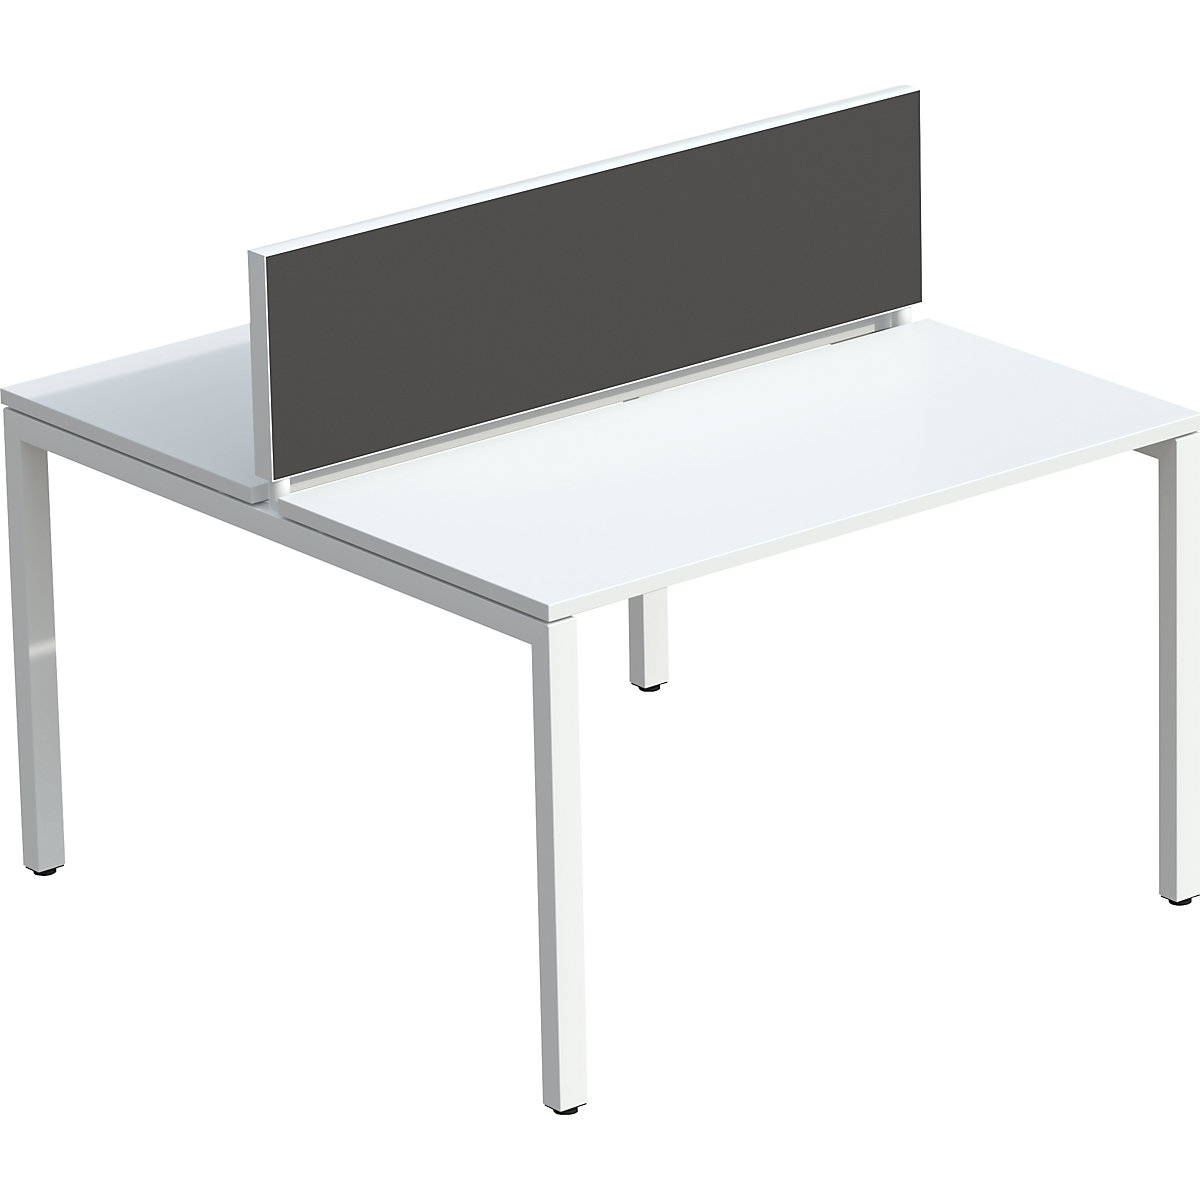 Table partition for team desks (Product illustration 16)-15